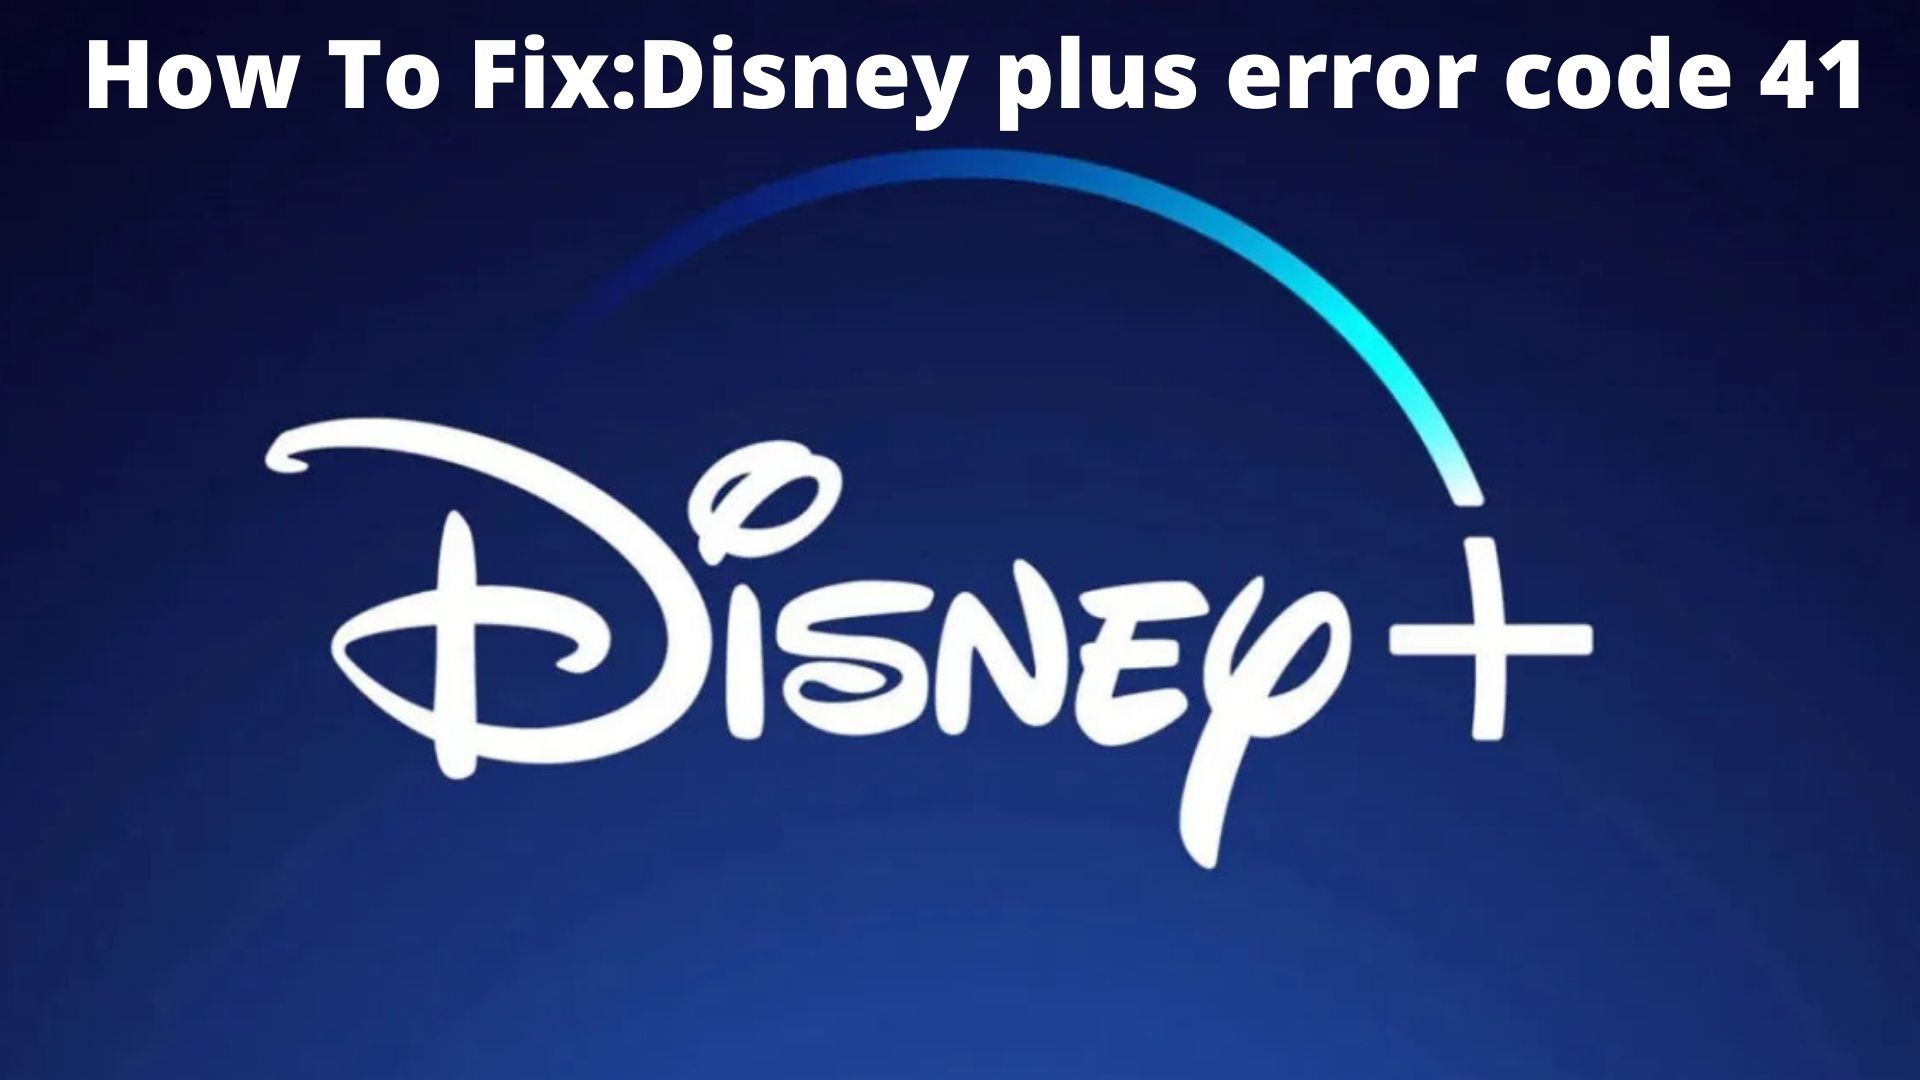 How To Fix Disney plus error code 41